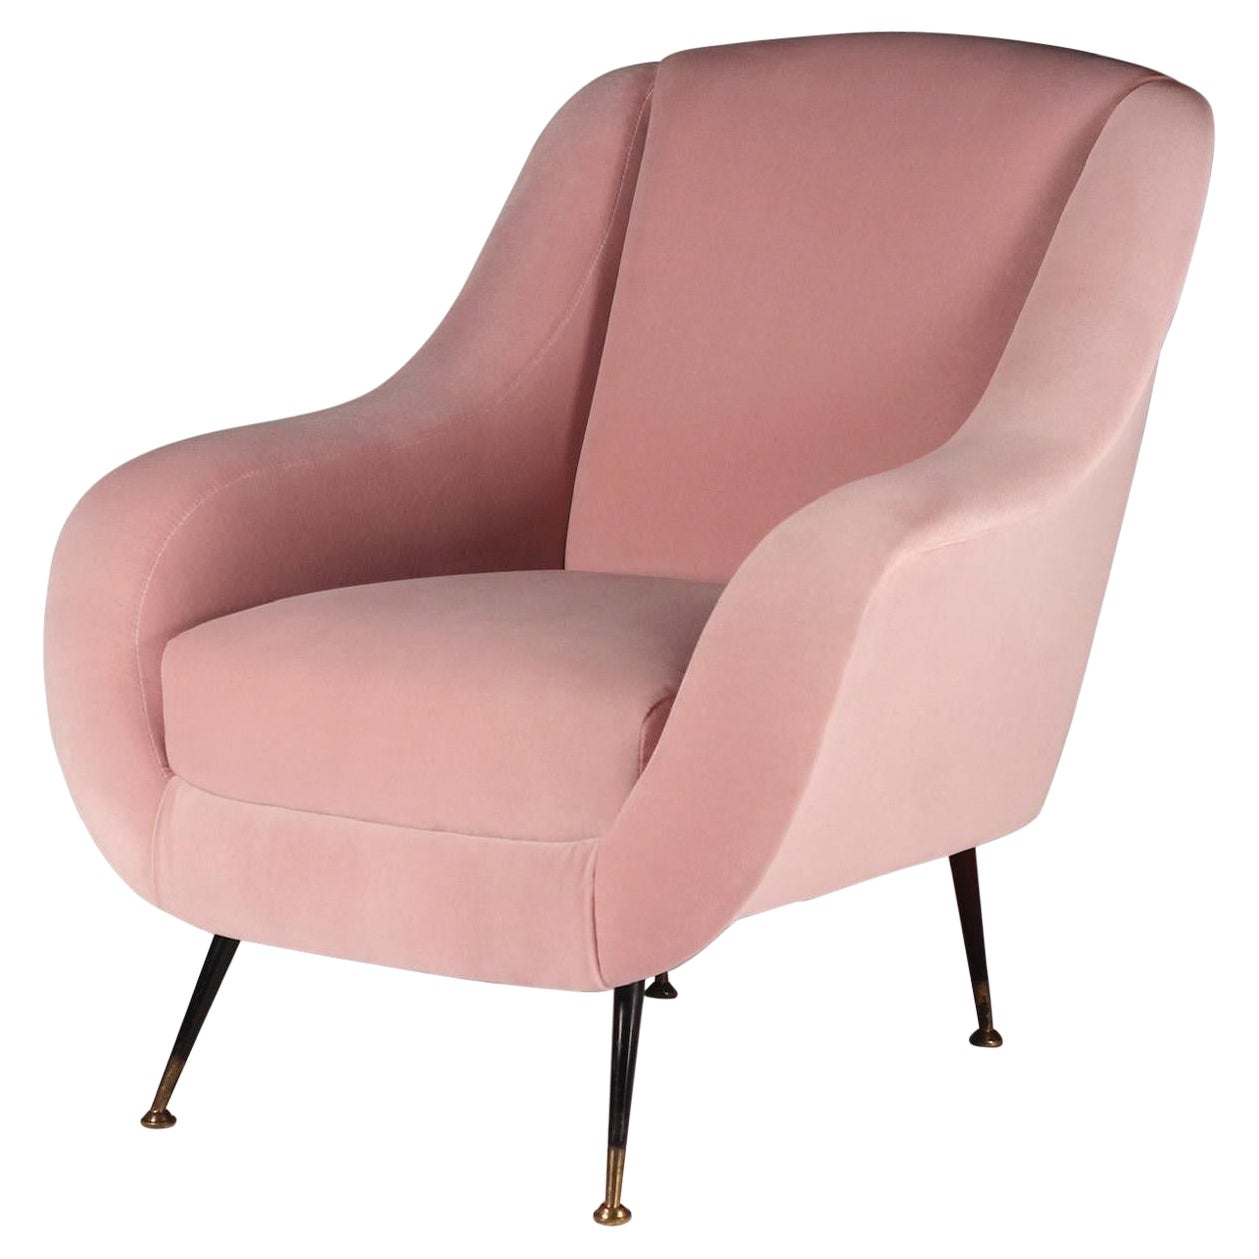 Pair of Mid-Century Style Italian Lounge Chair in Velvet Rose Pink